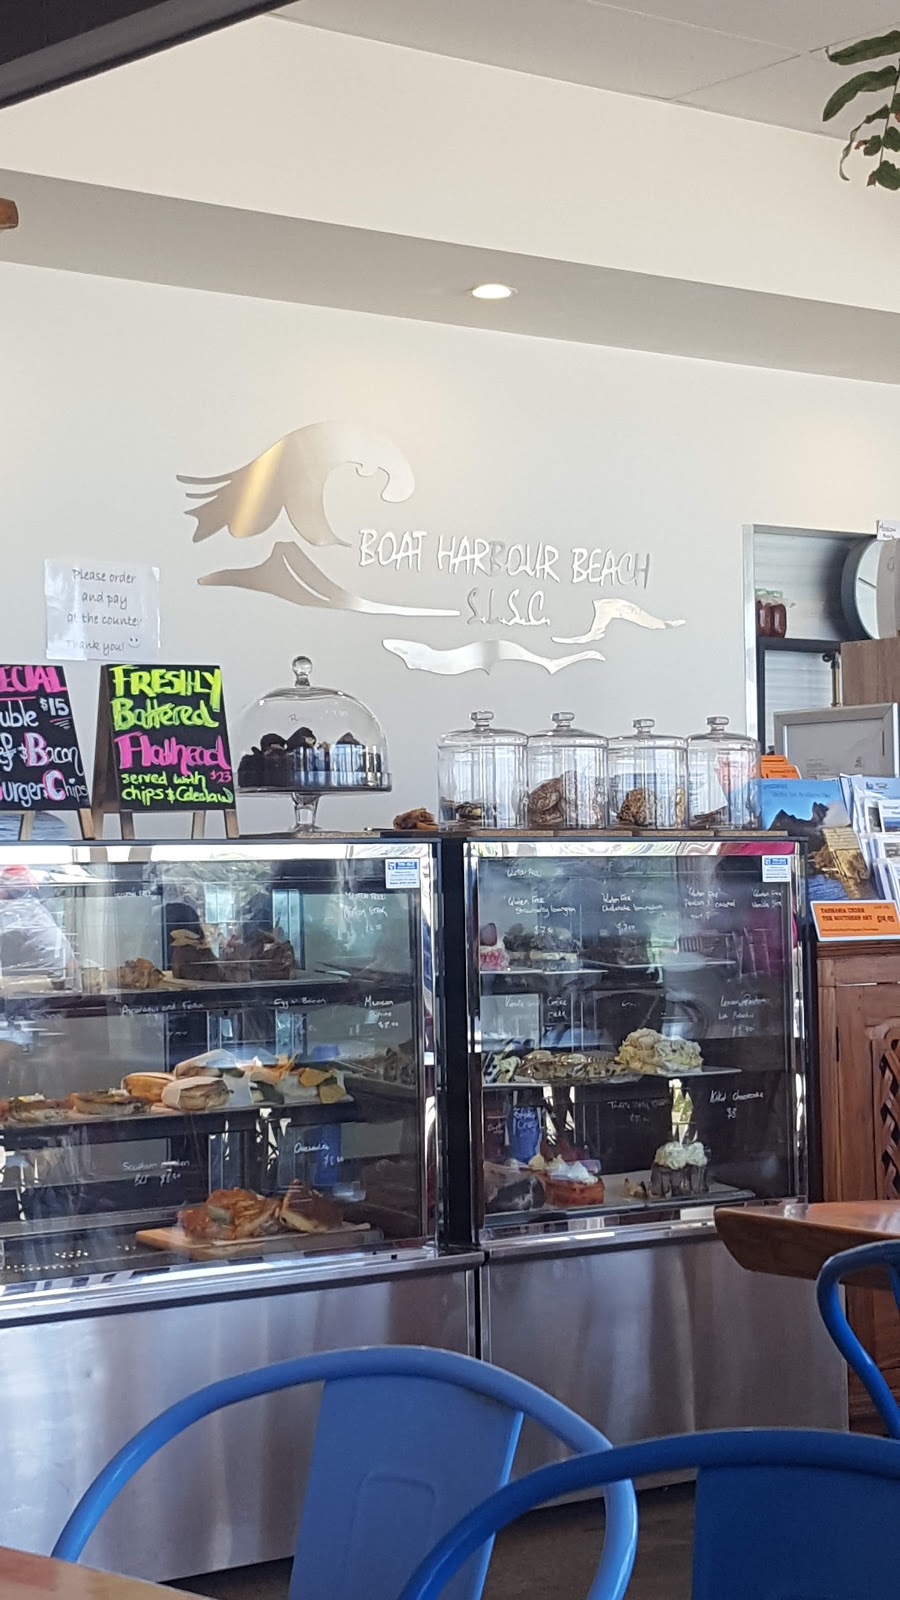 Sweet Ness At The Sea | restaurant | 290 Port Rd, Boat Harbour Beach TAS 7321, Australia | 0364450869 OR +61 3 6445 0869